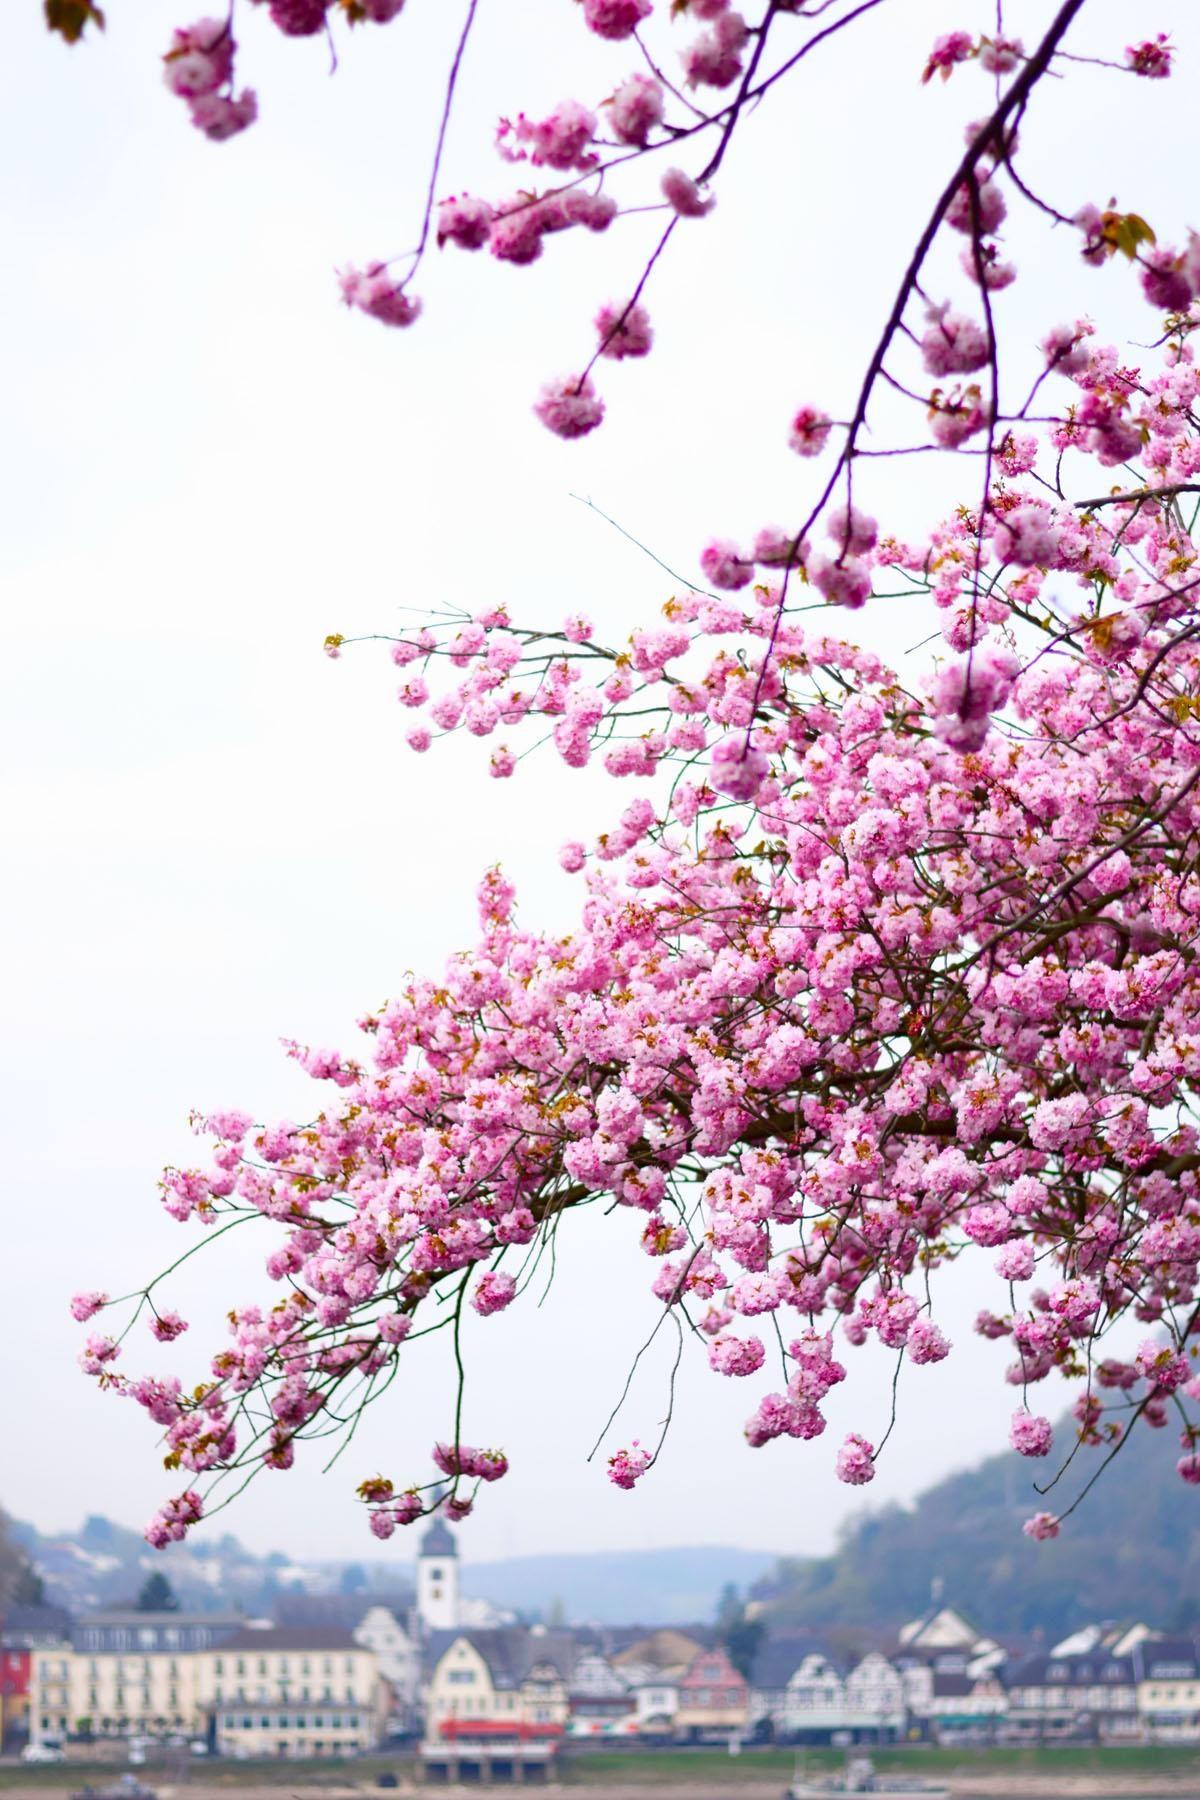 Ich kann es kaum erwarten...
#kirschblüte #frühlingsgefühle #frühling #vorfreude